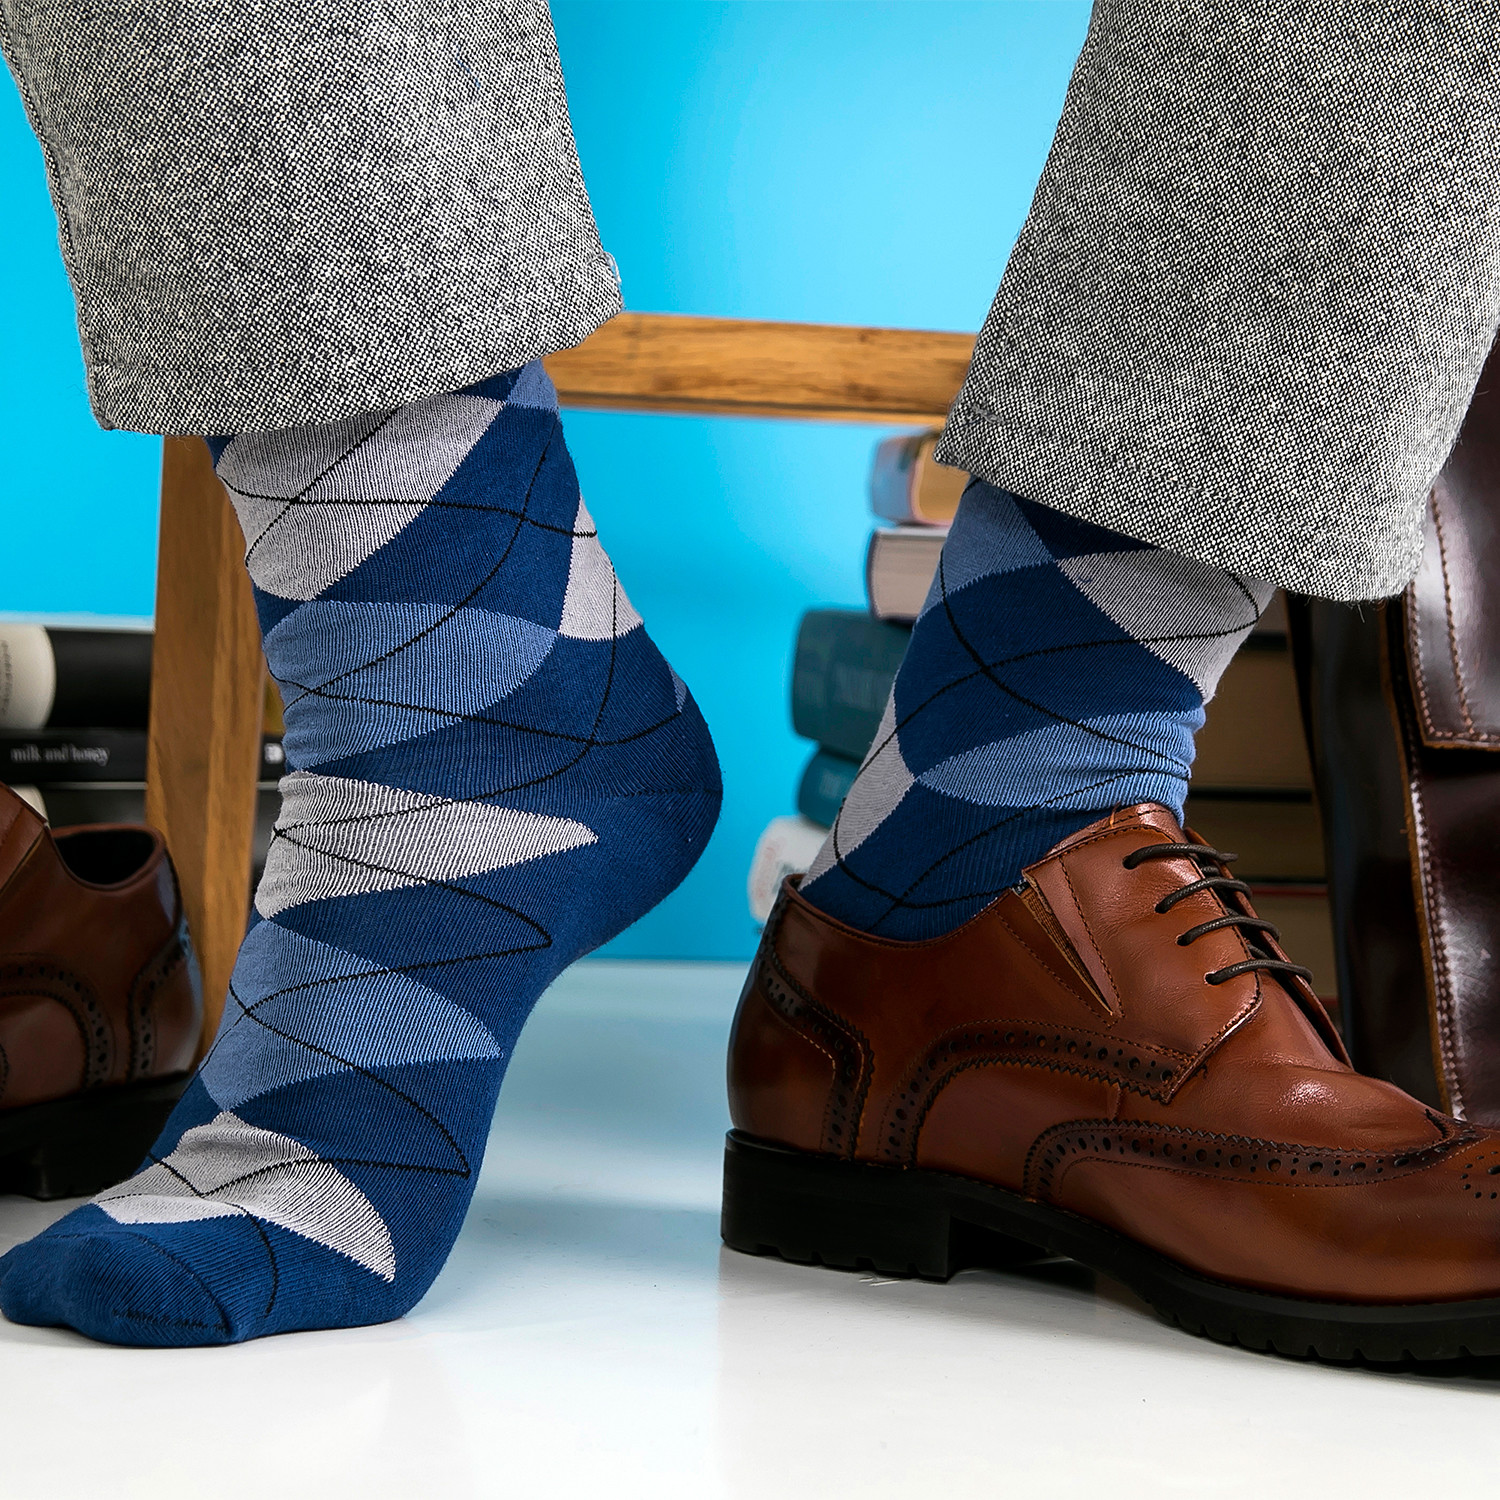 Coleton Fishacre Socks // Set of 4 - IBG Nordic PERMANENT STORE - Touch ...